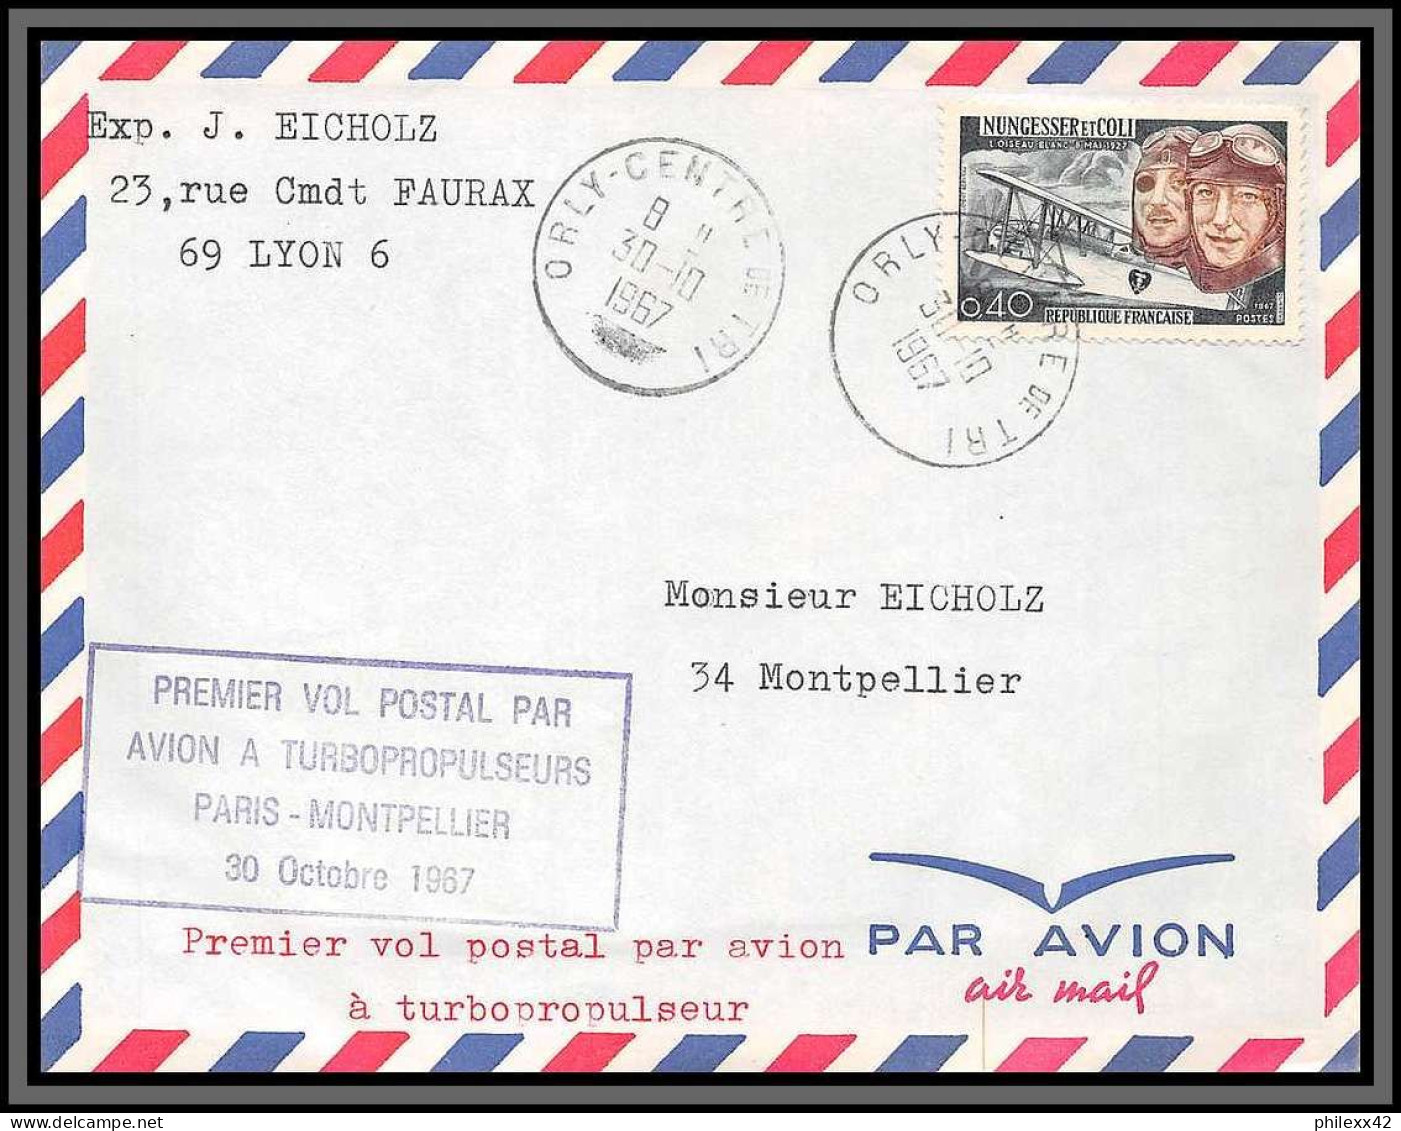 10251 1er Vol Postal Par Avion A Tubopropulseurs Paris Montpellier Orly 30/10/1967 Lettre Cover France Aviation  - First Flight Covers